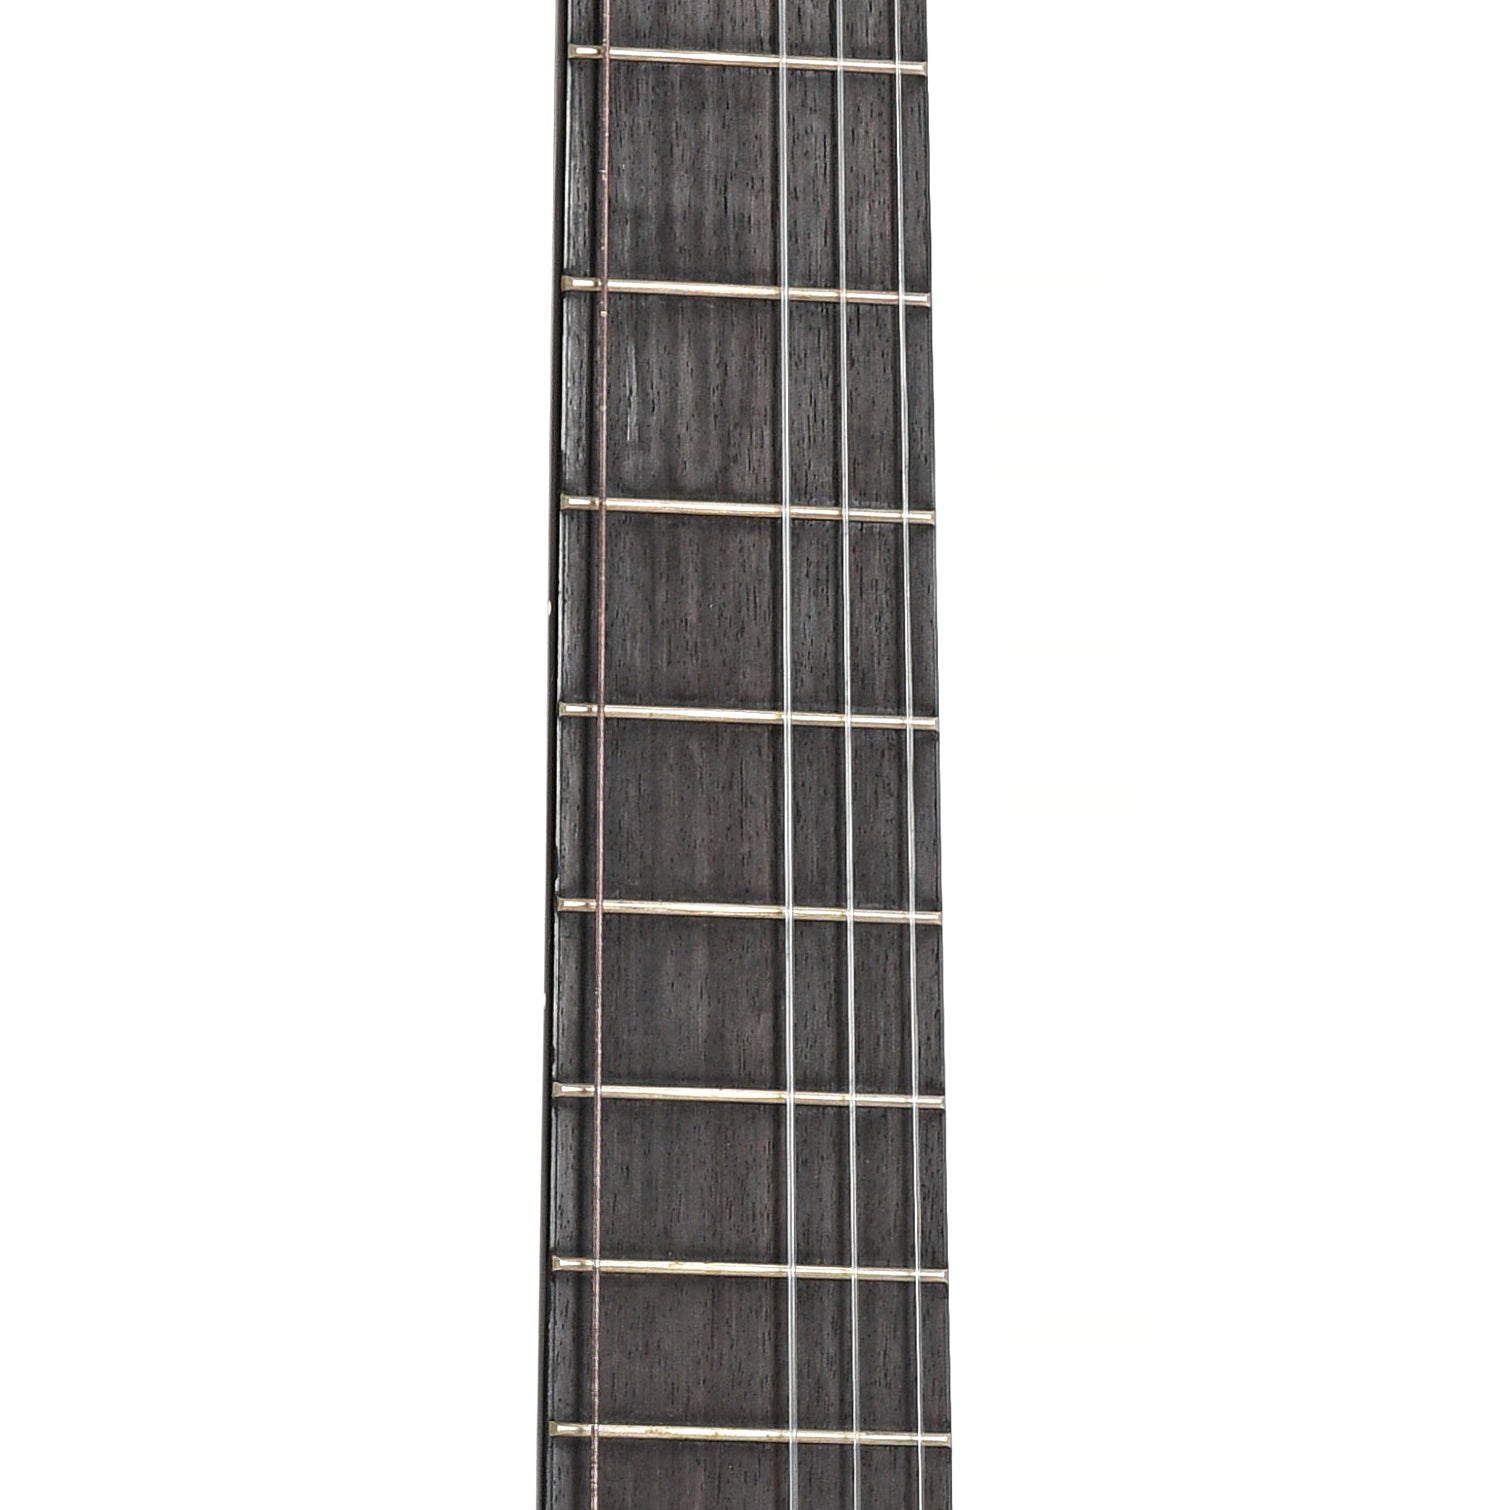 Yamaha CG170SA Classical Guitar (1990) – Elderly Instruments